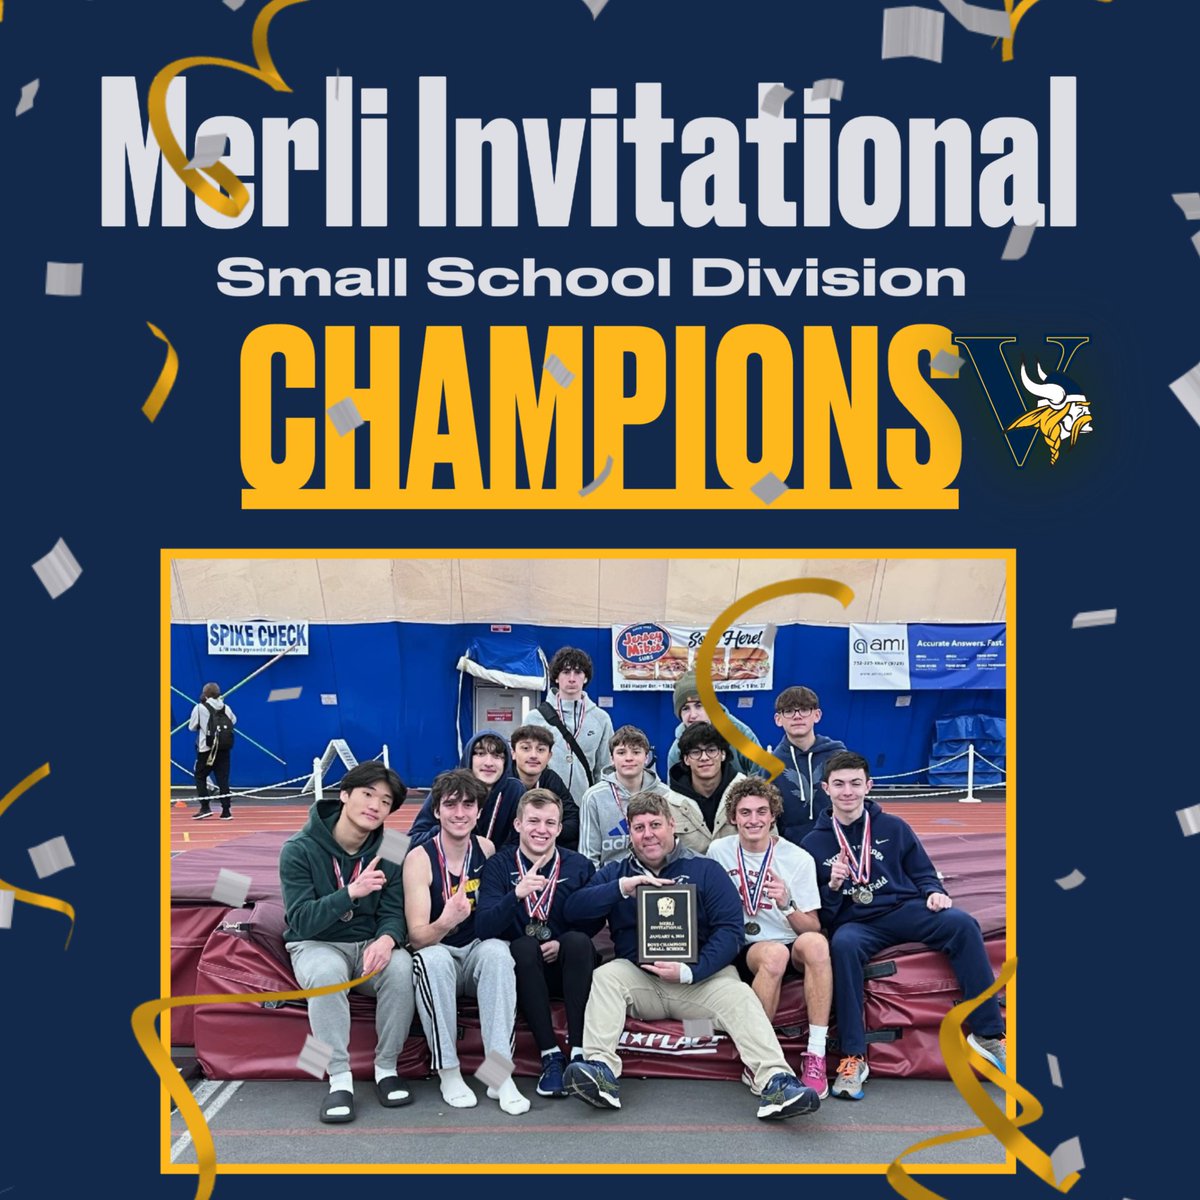 Vernon Boys repeat as Merli Invitational Small School Division Champions @dailyrecordspts @NJHSports @vthsathletics @njmilesplit @VTHSVikings @VernonTwpSD @gstatesports